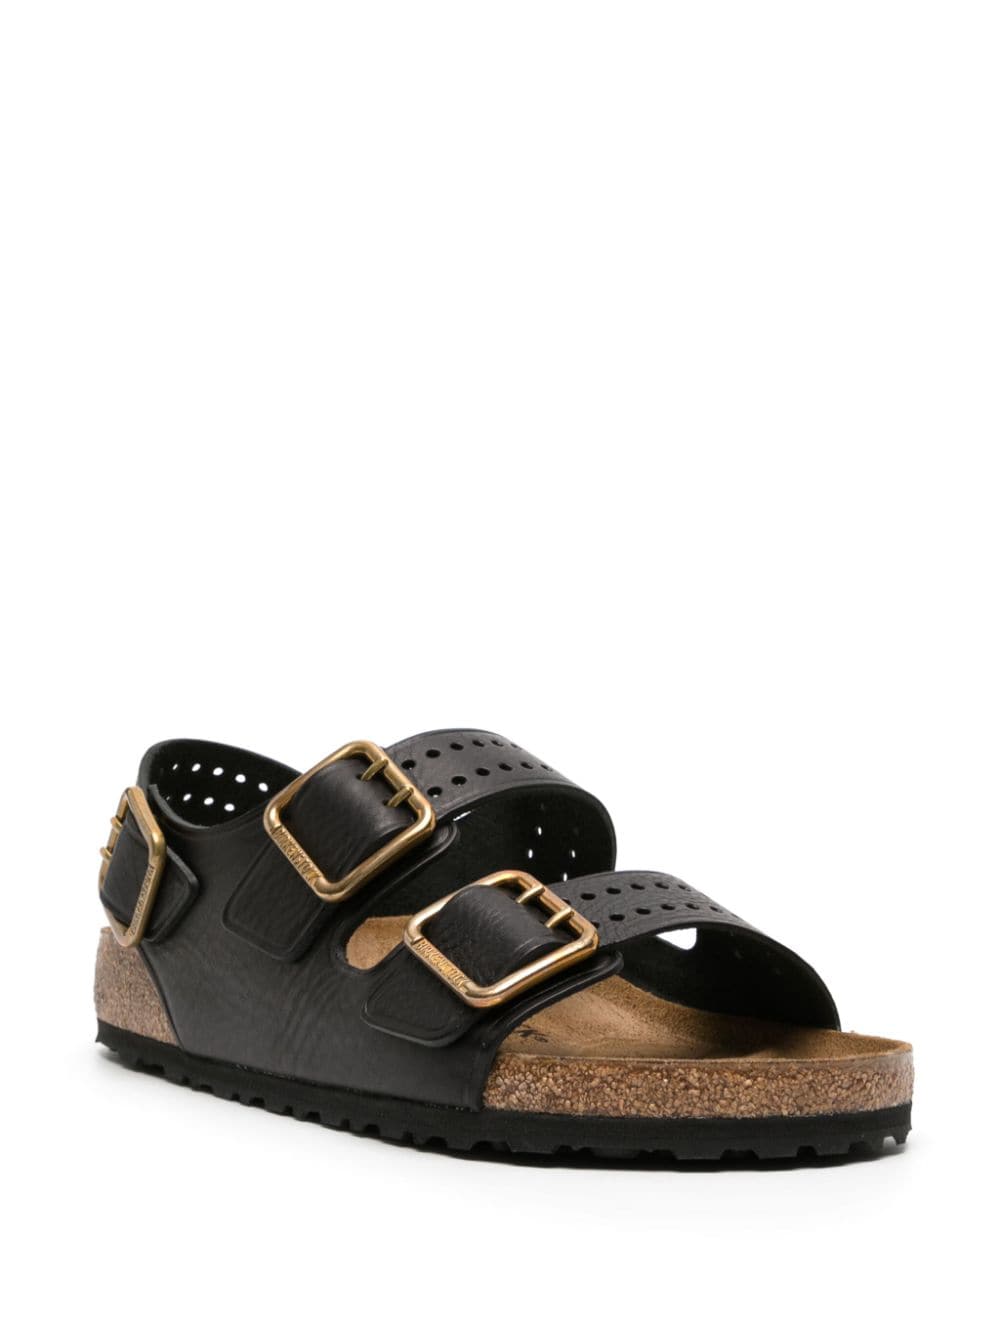 Shop Birkenstock Milano Leather Sandals In Black